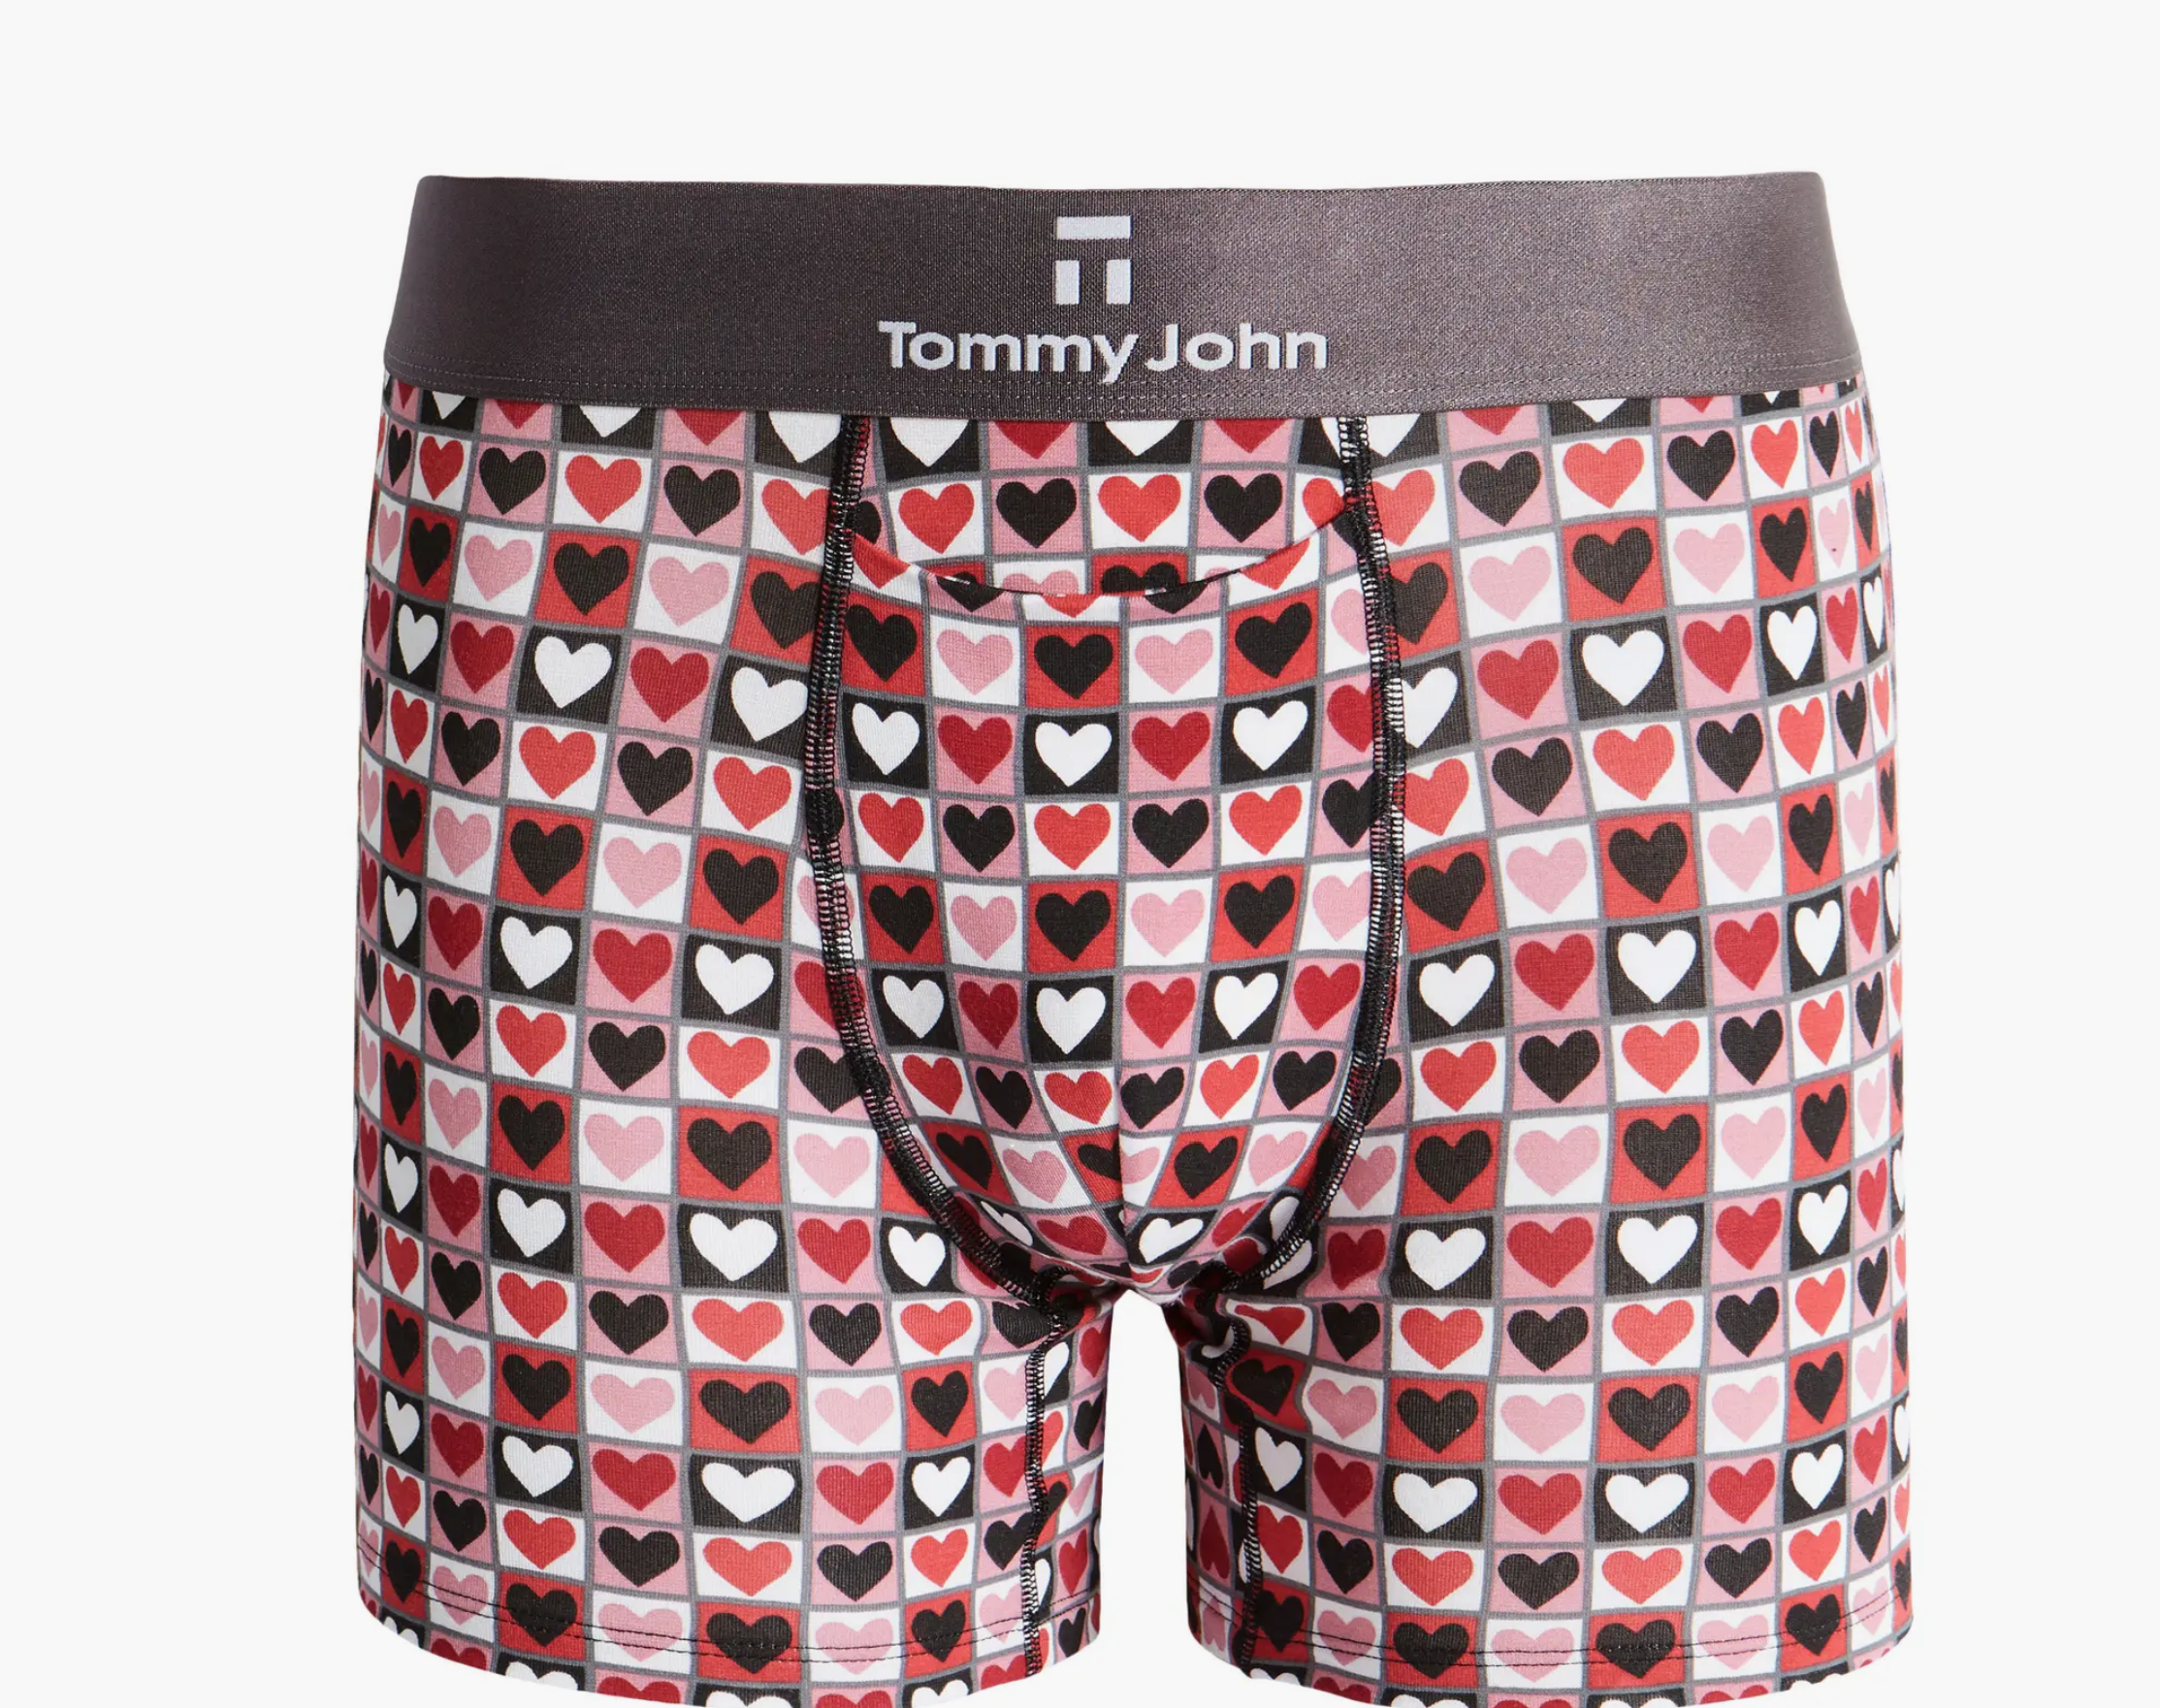 Tommy John, Intimates & Sleepwear